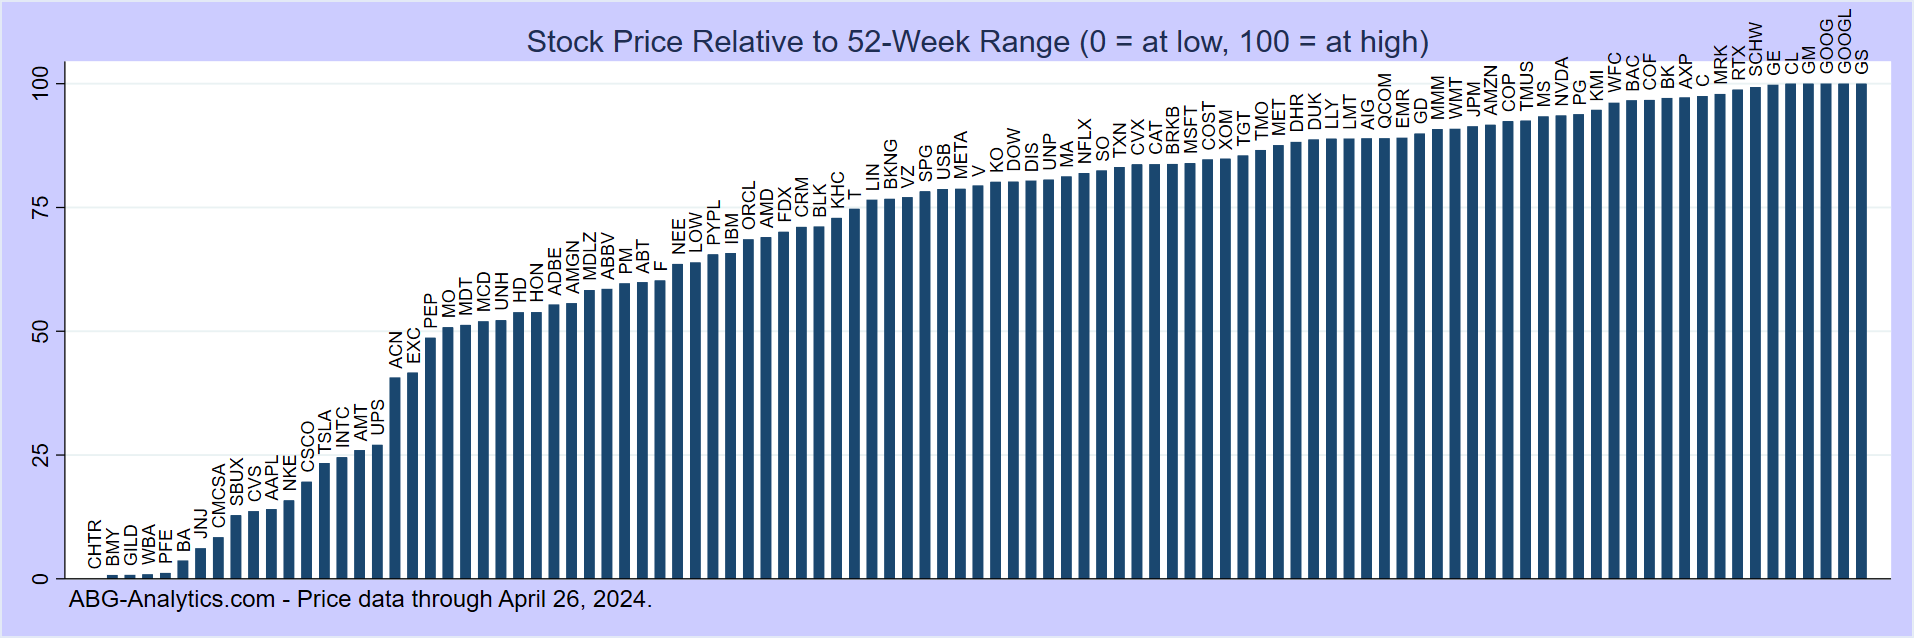 Bar Chart of Stock Price Relative to 52-Week Range